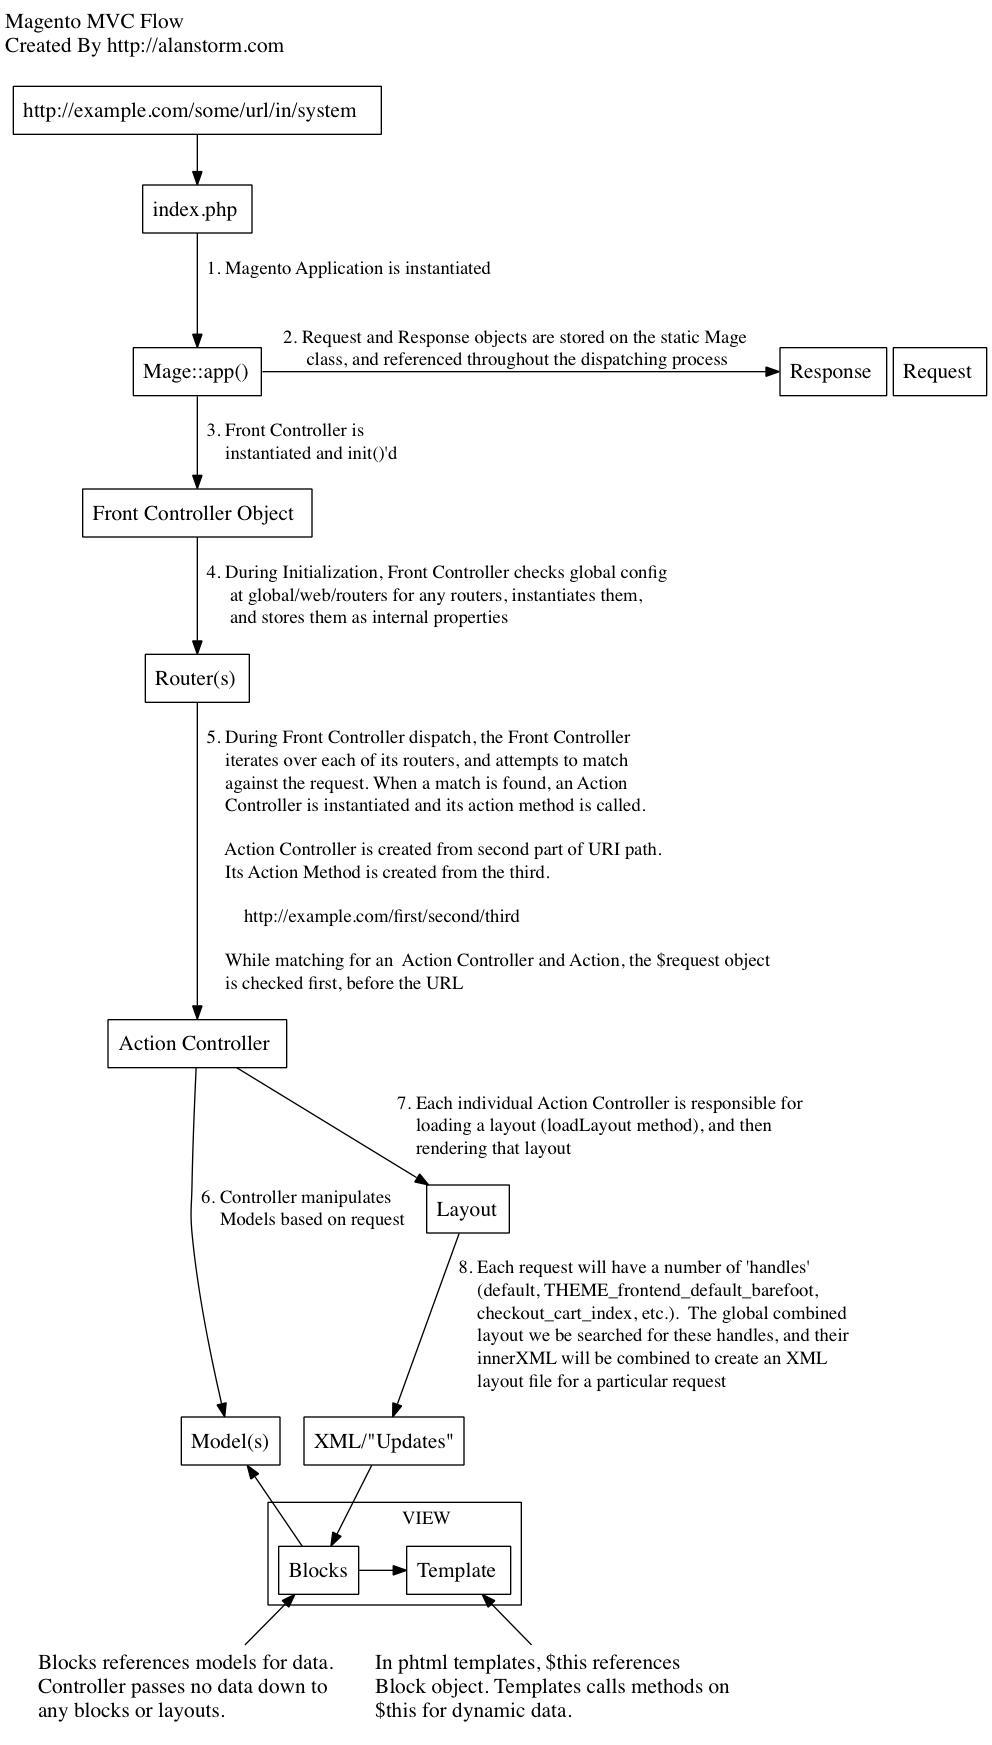 Alan Storm's diagram explaining Magento's "MVC" pattern